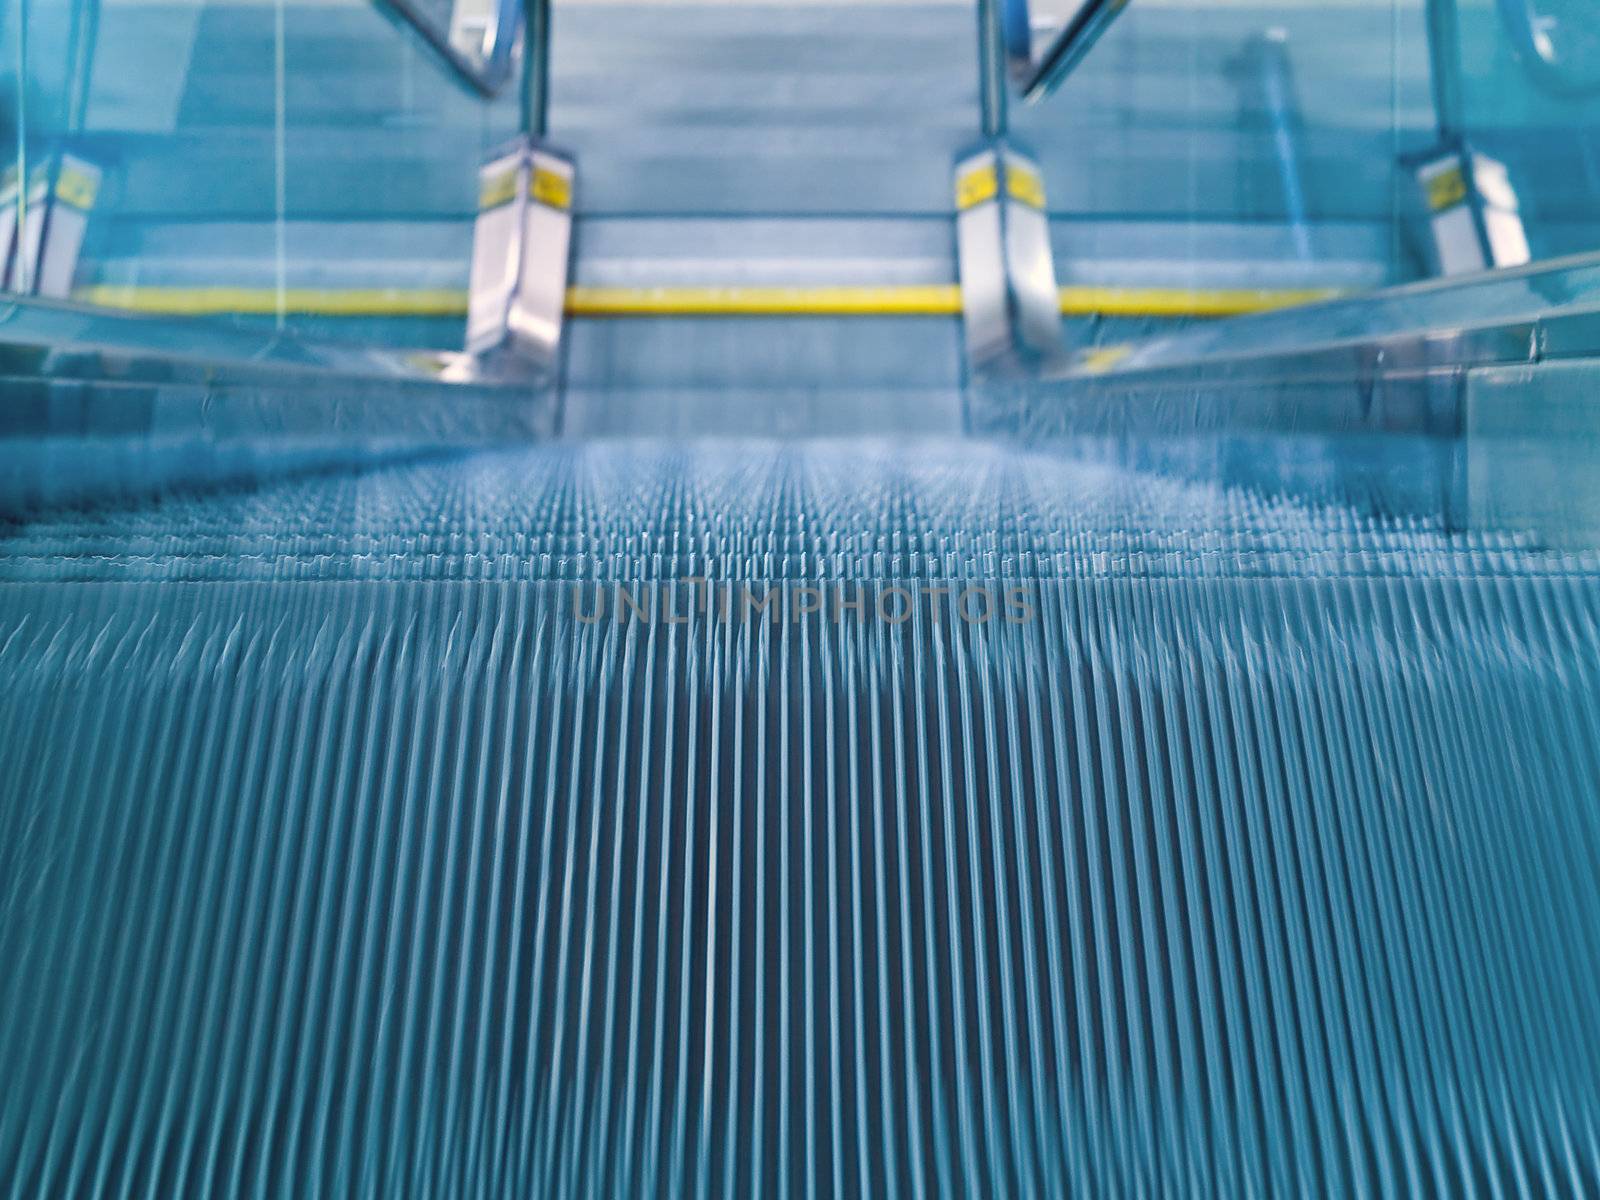 Airport Escalator by Frankljunior